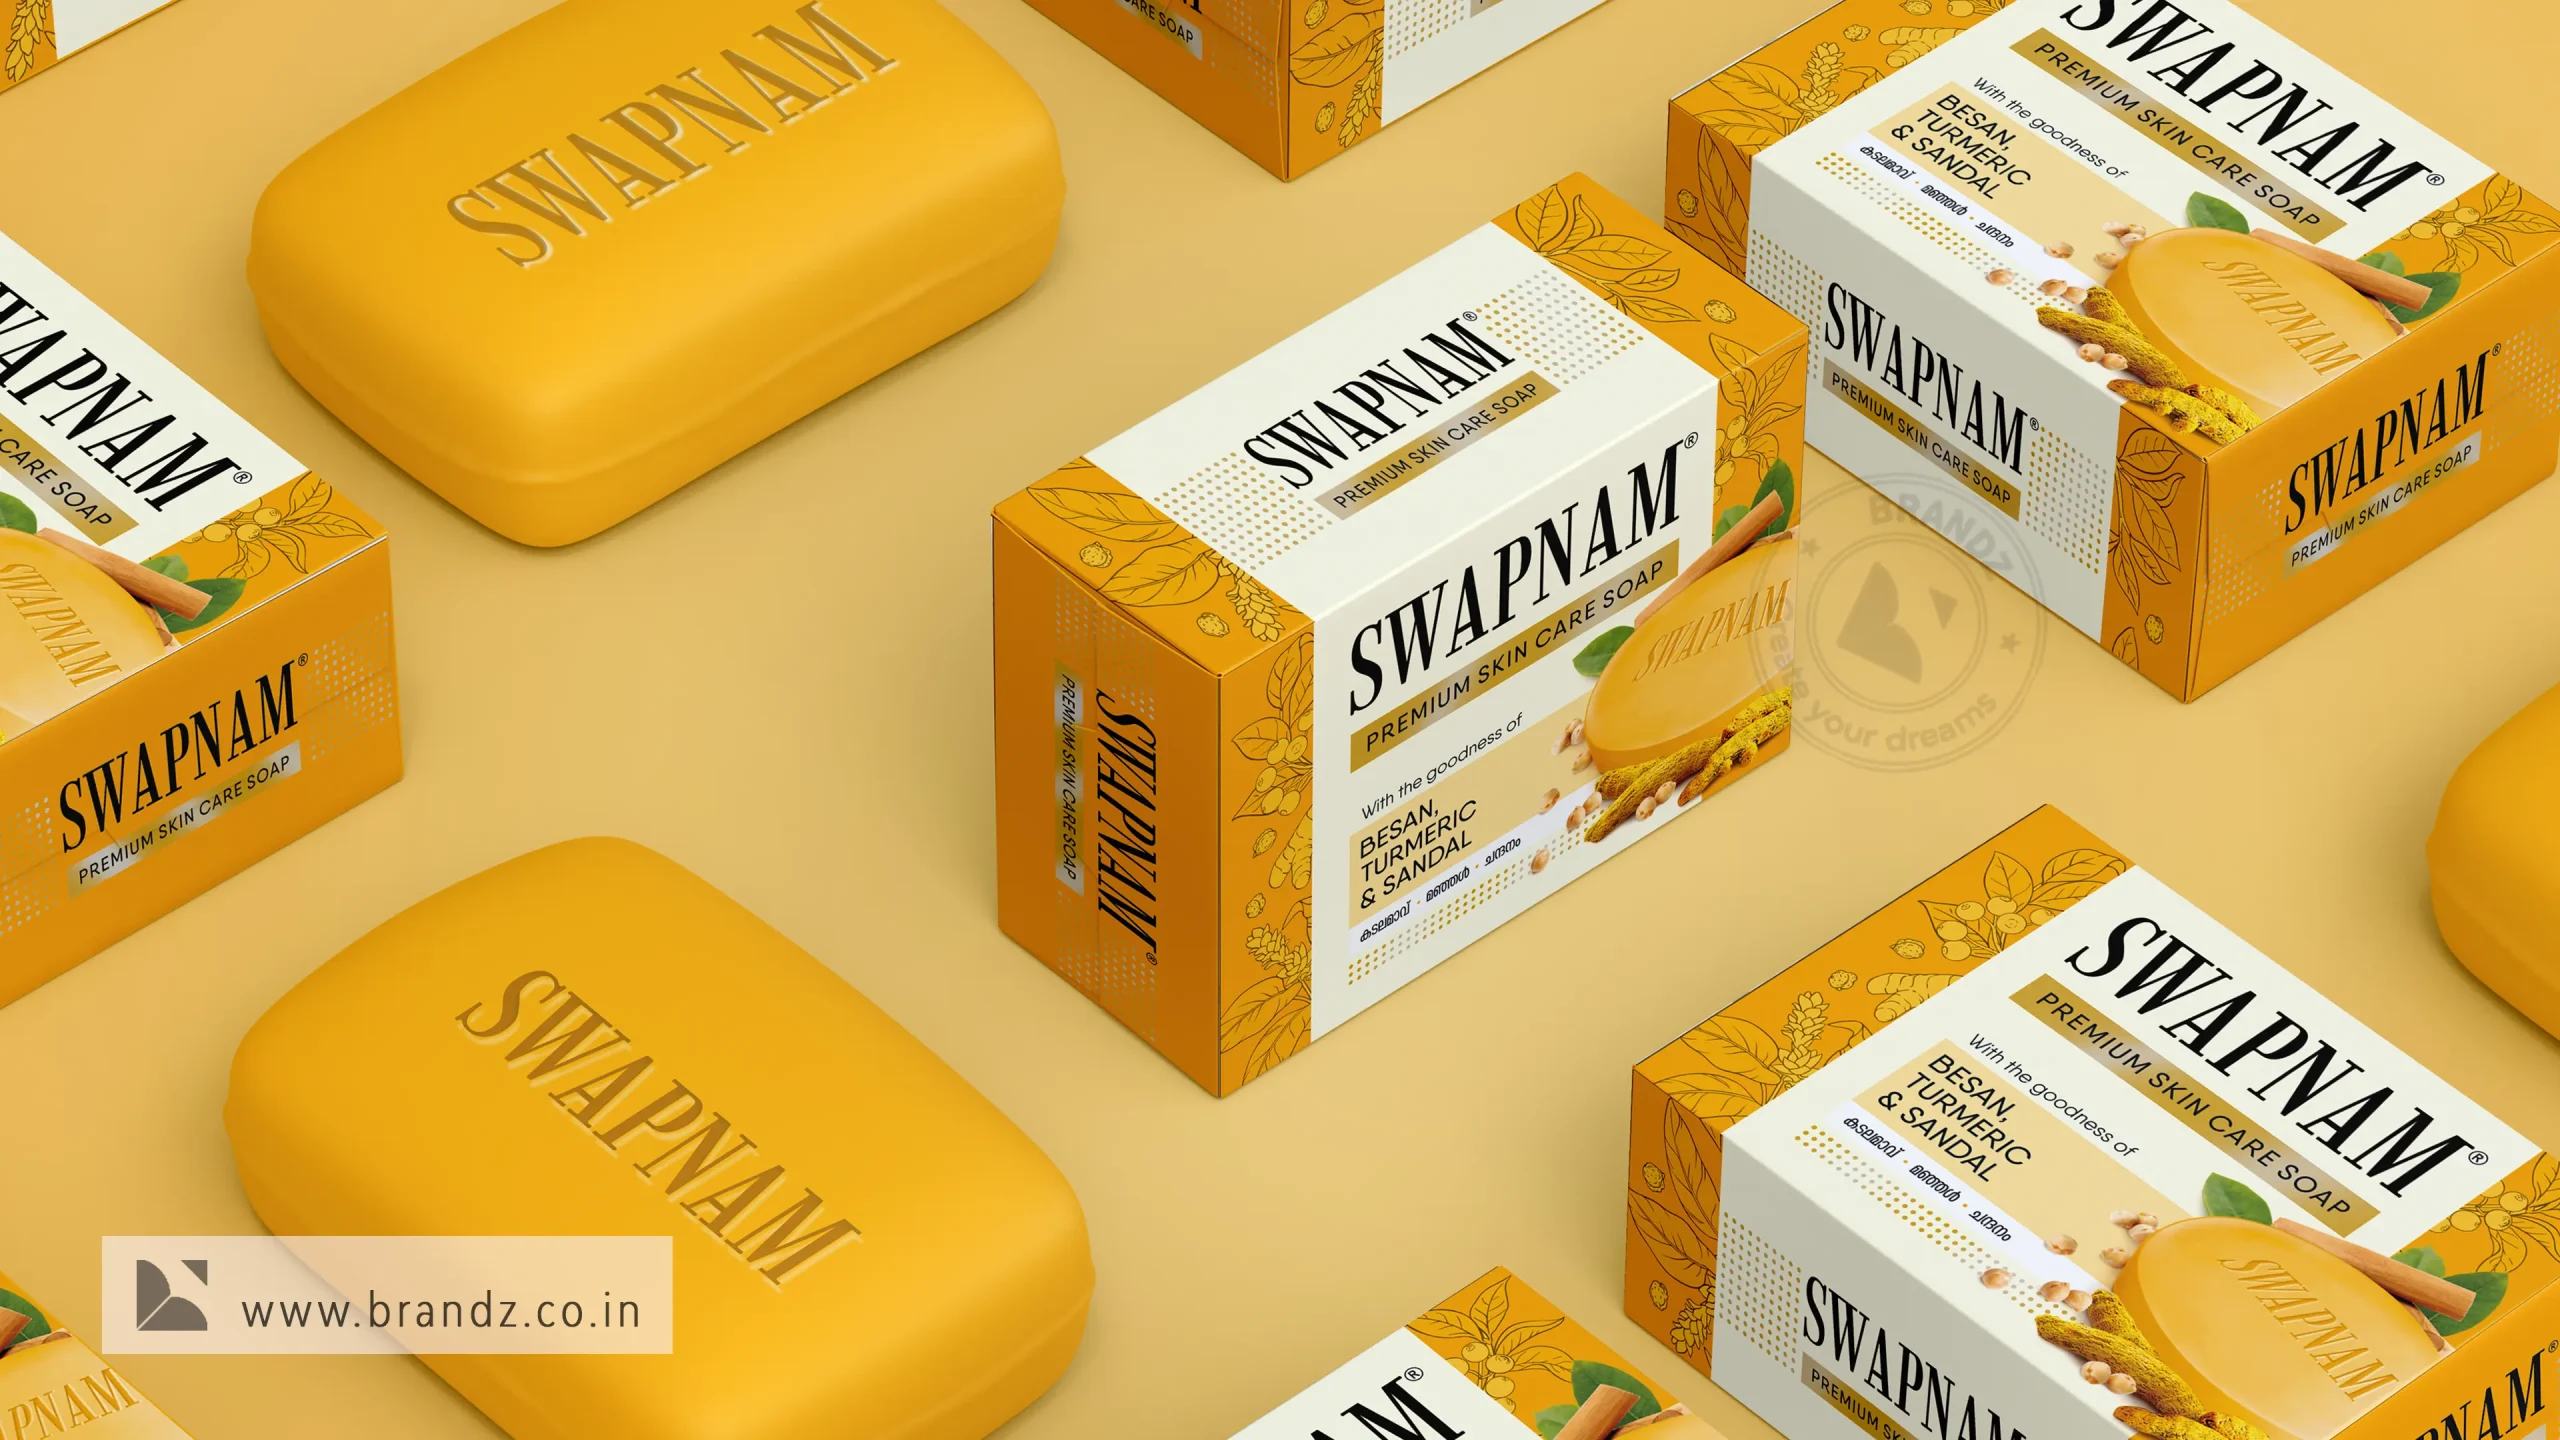 Swapanam soap box